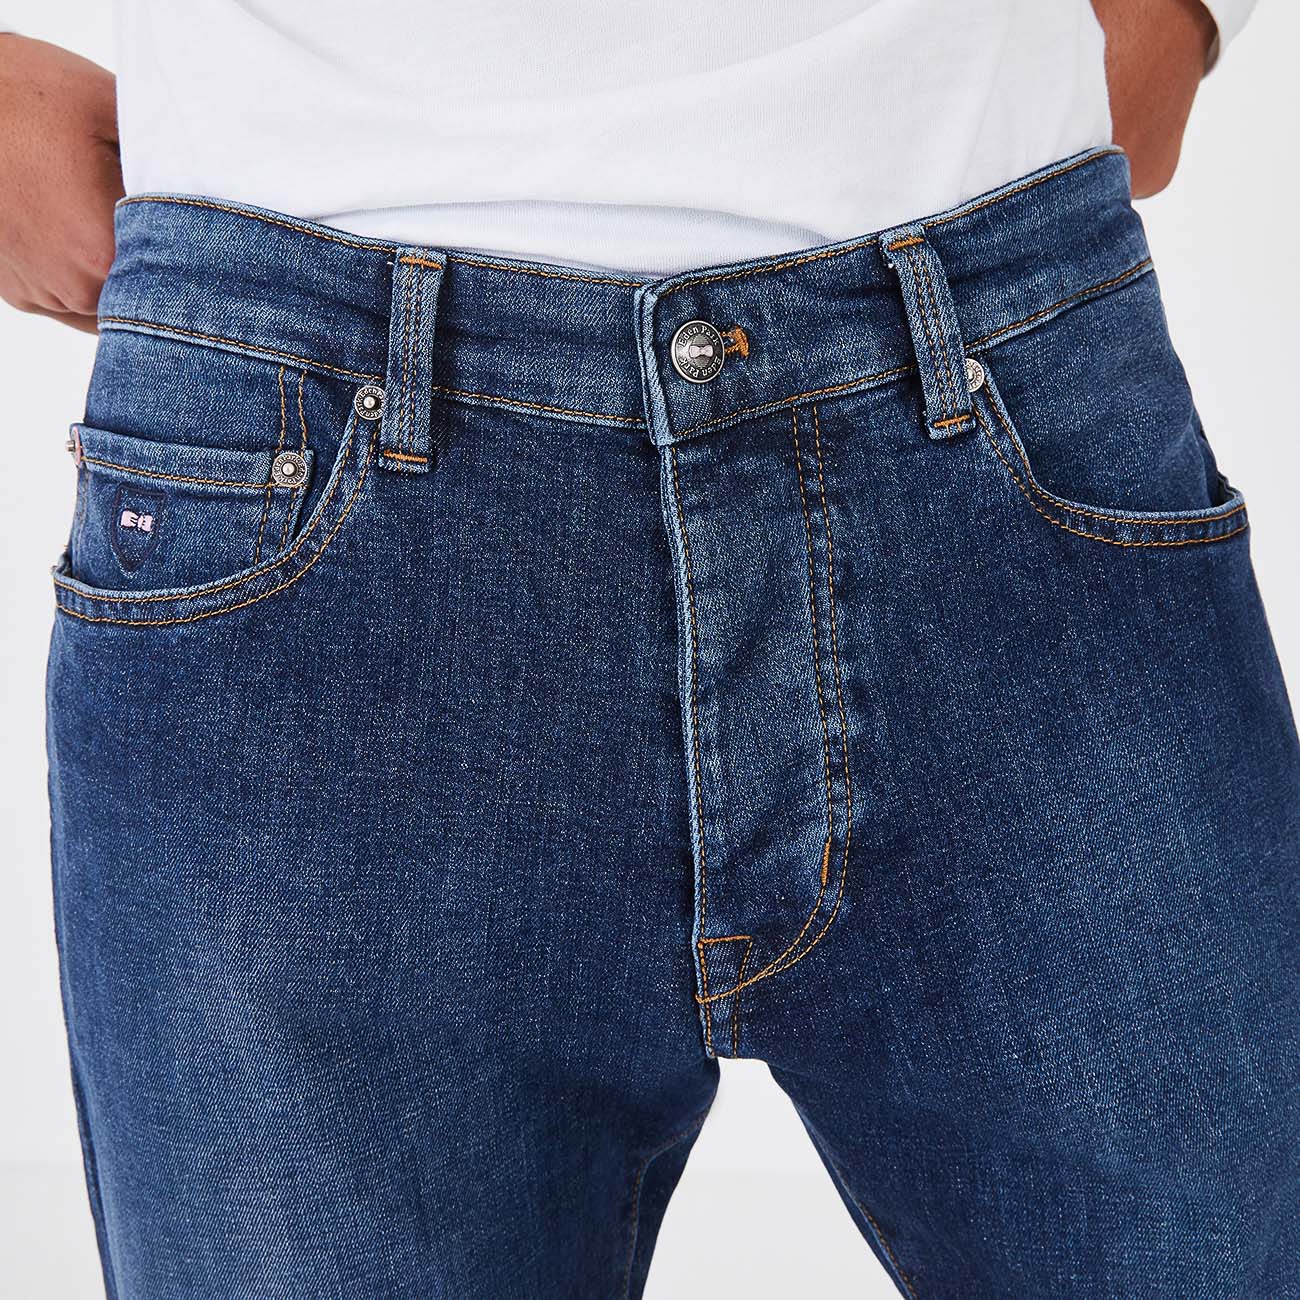 Eden Park Jeans in regular classic fit.